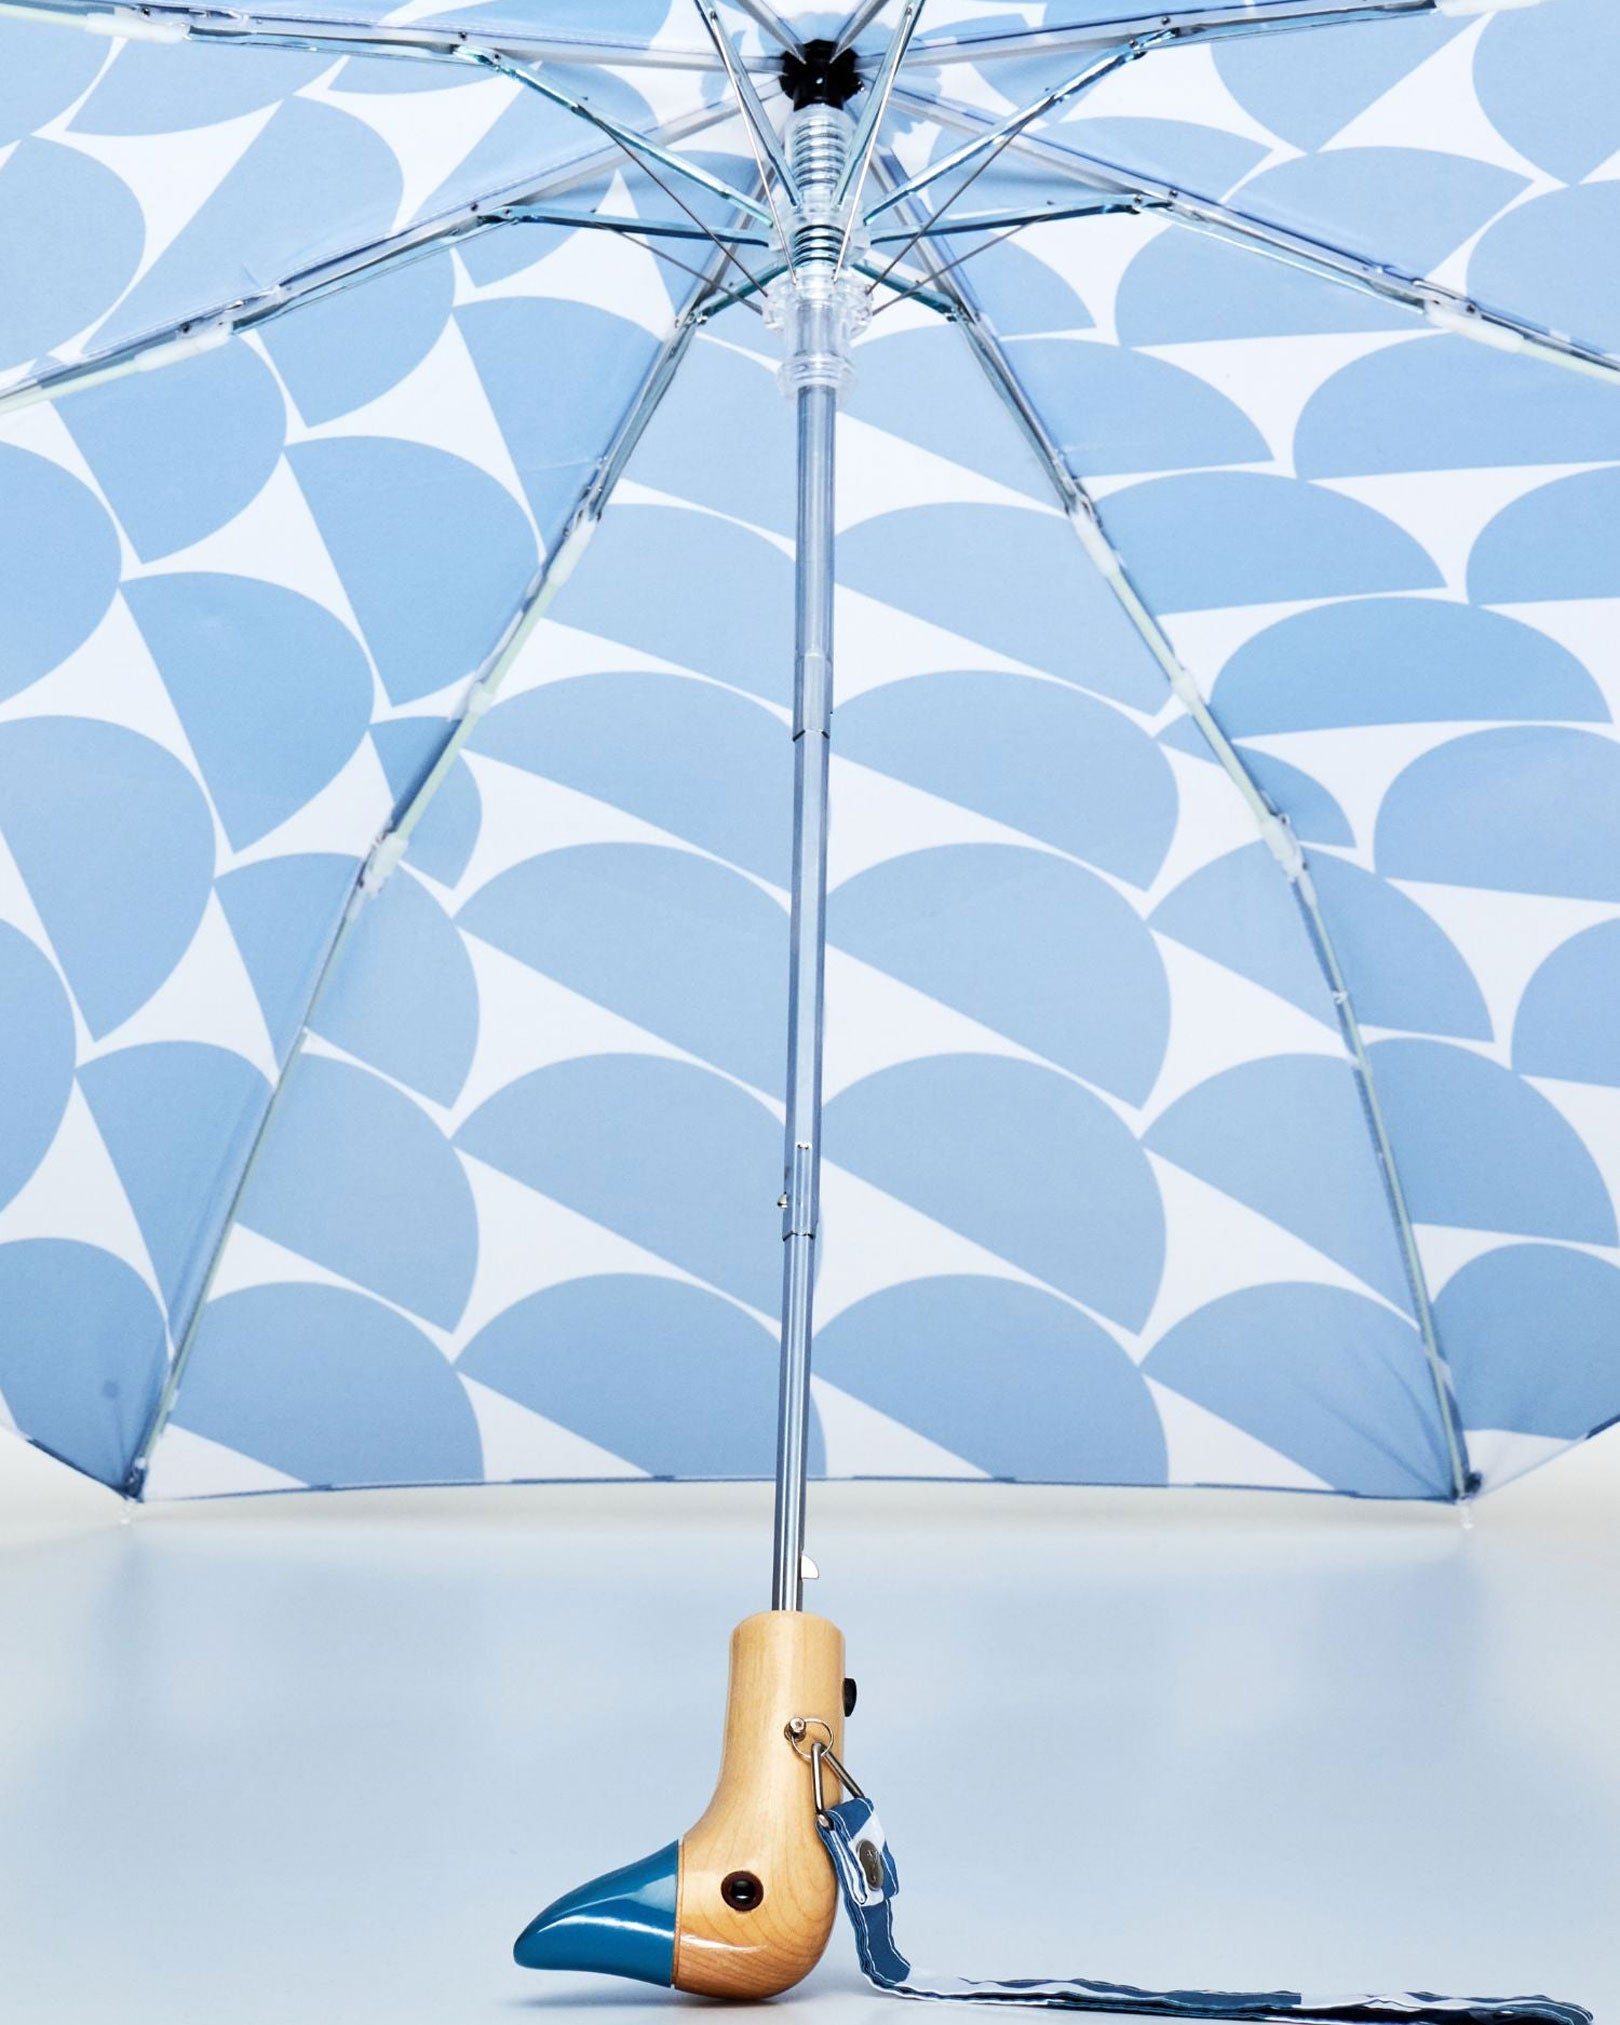 ORIGINAL DUCKHEAD Compact Umbrella in Denim Moon available at Lahn.shop